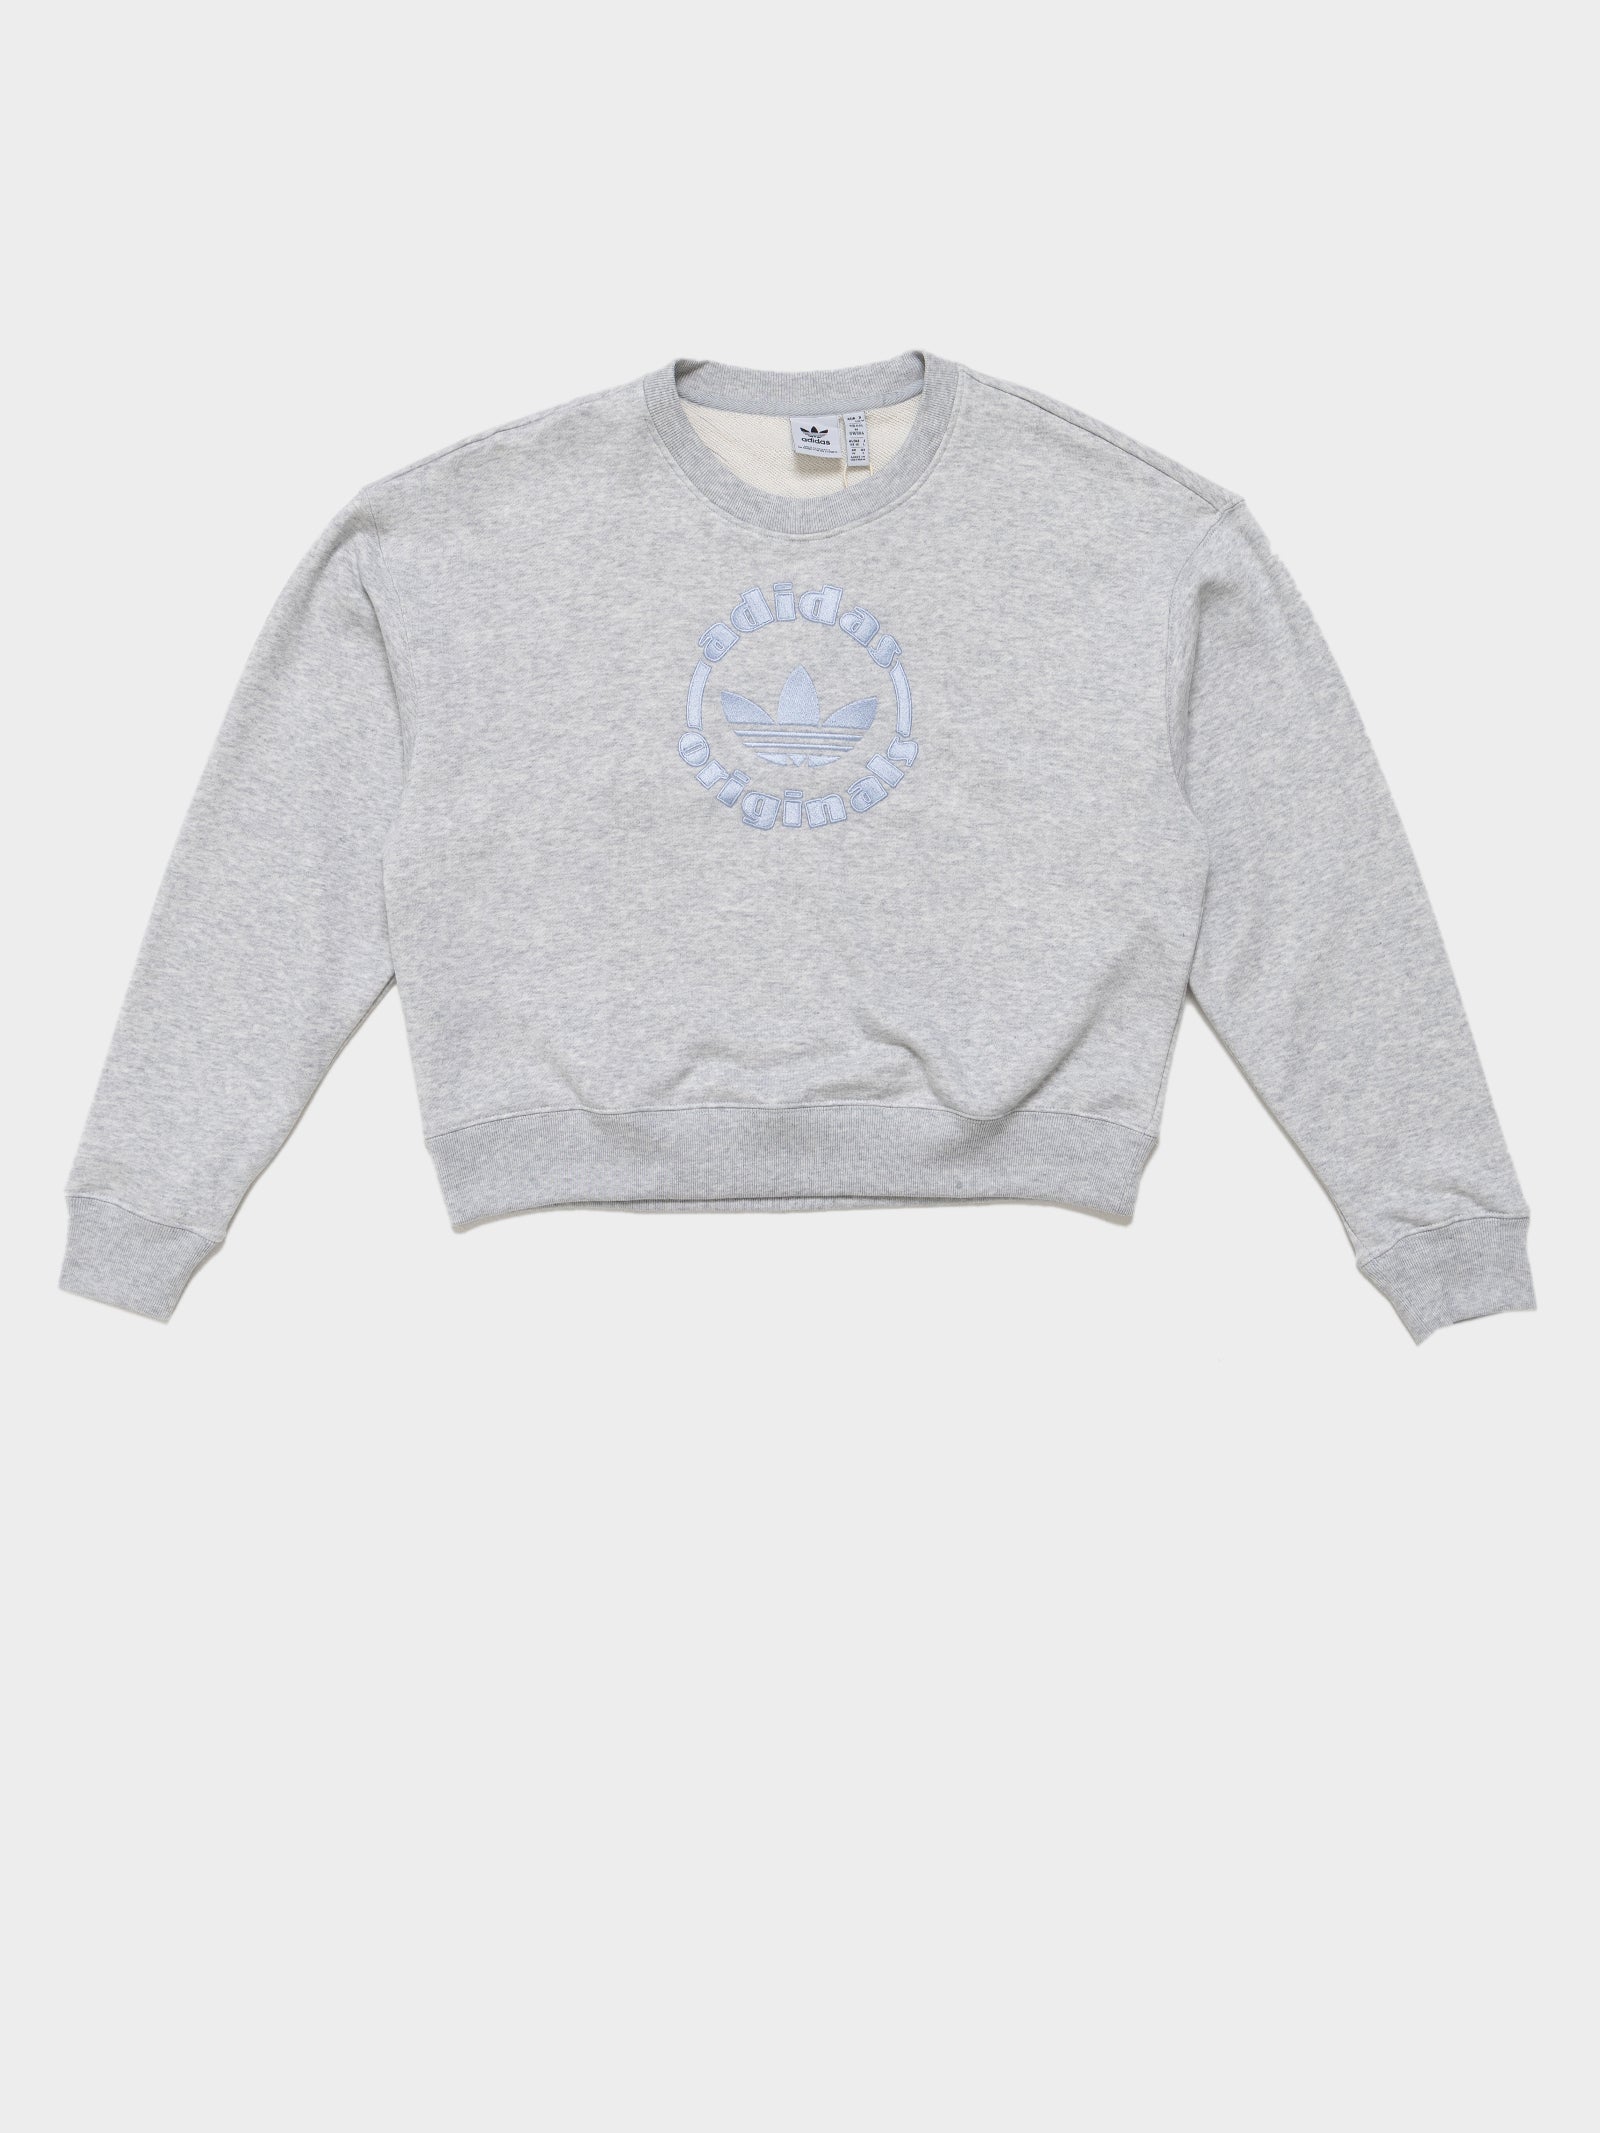 Sweatshirt in Light Grey Heather - Glue Store